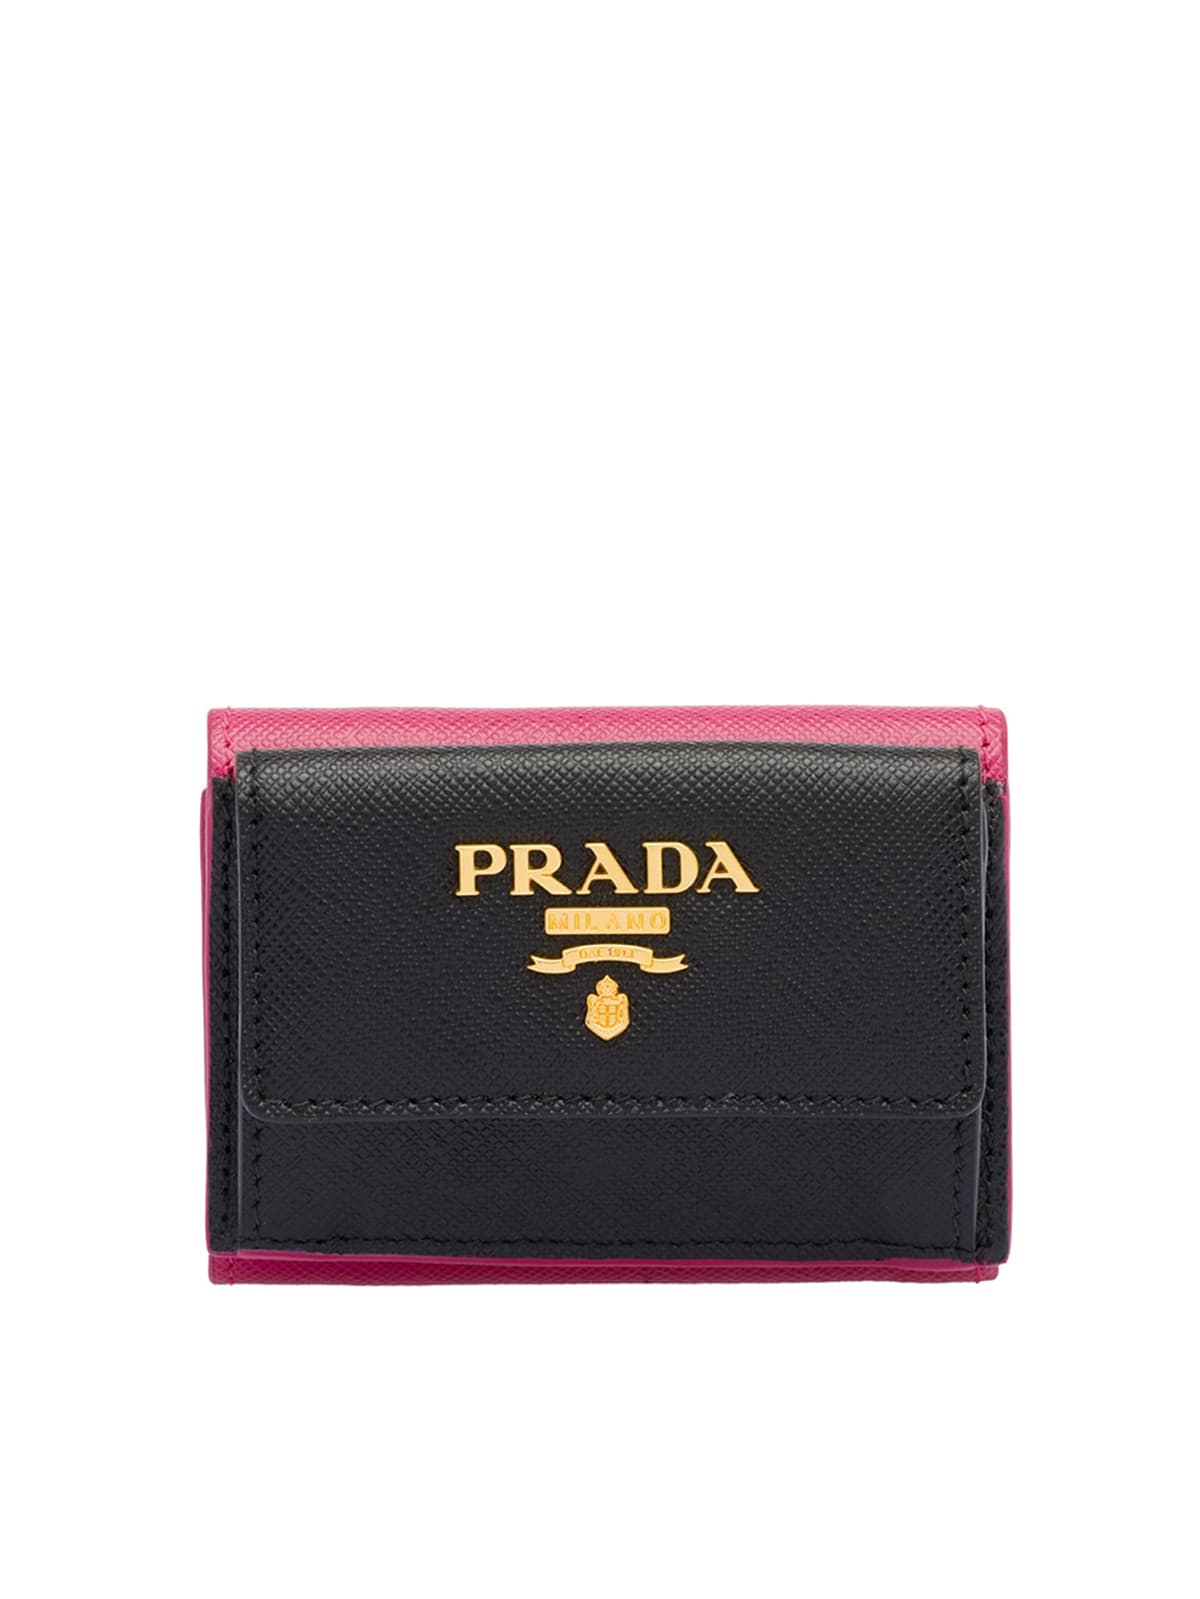 Prada Mini Wallet